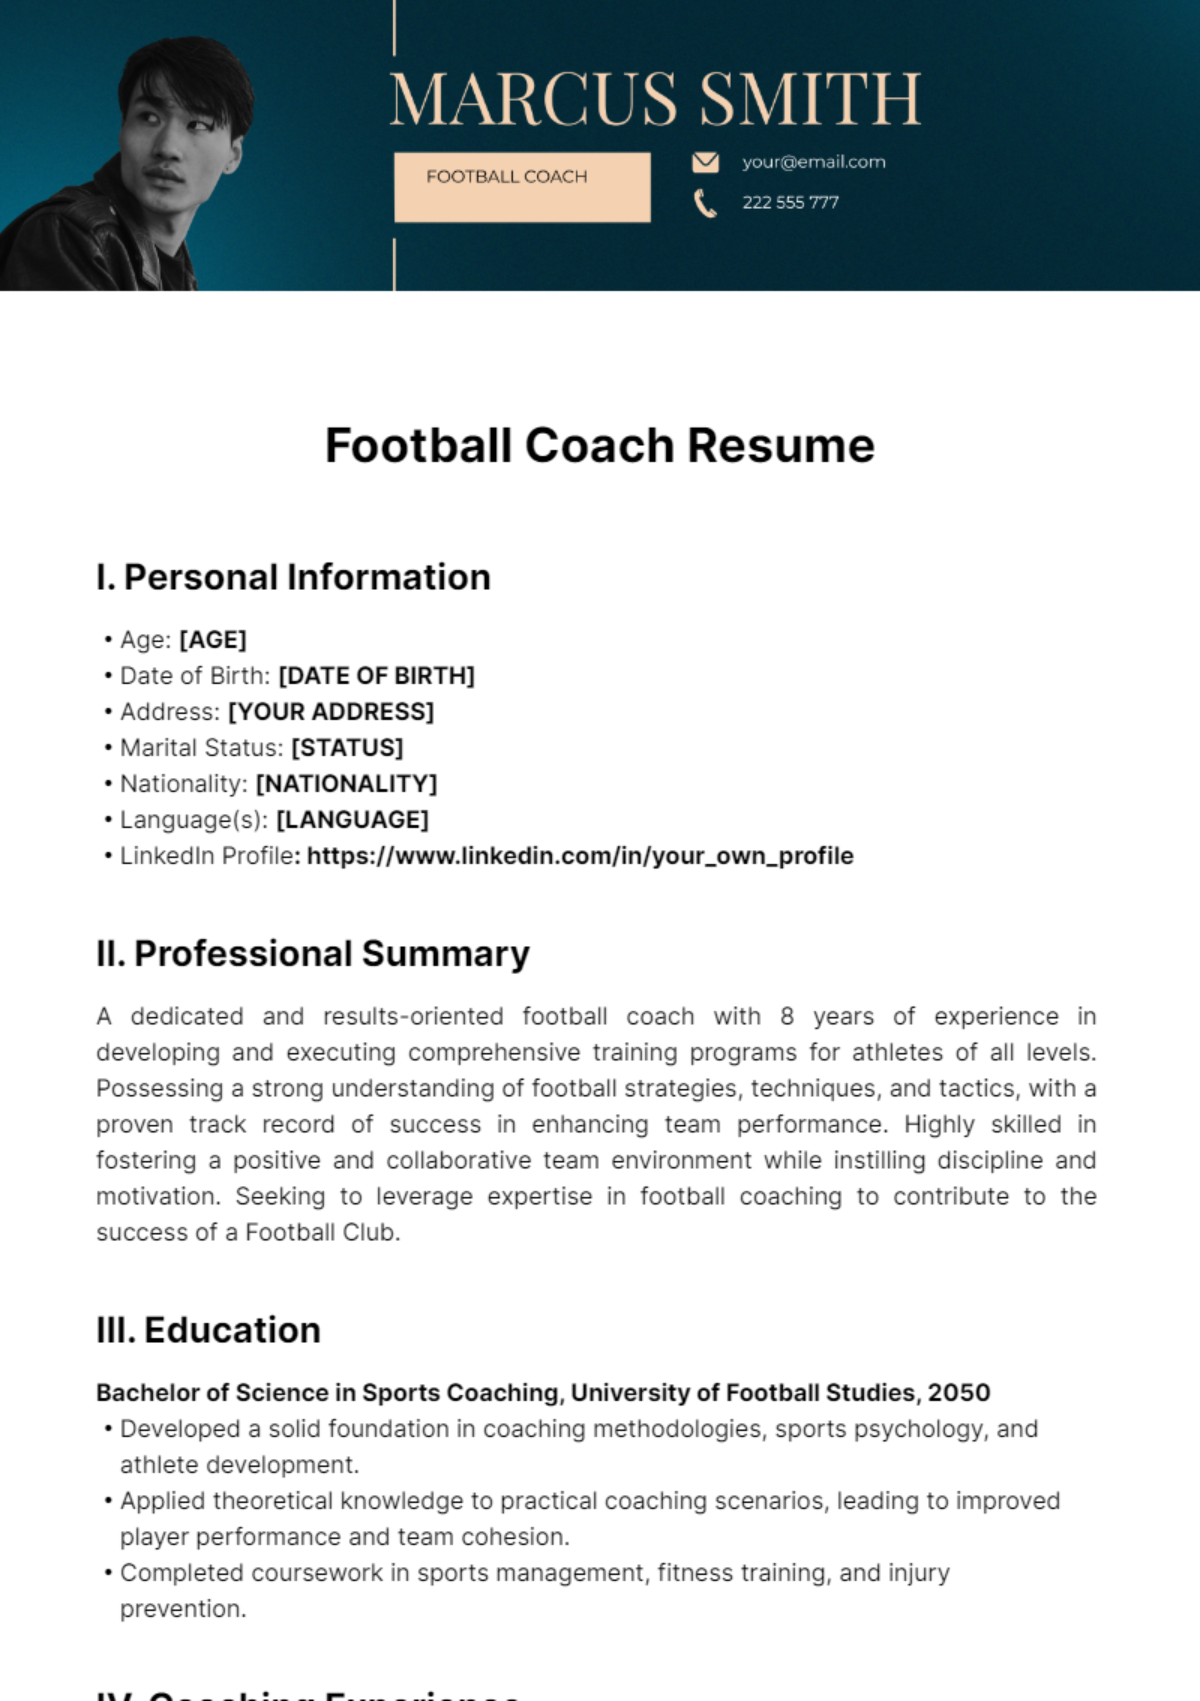 Football Coach Resume Template